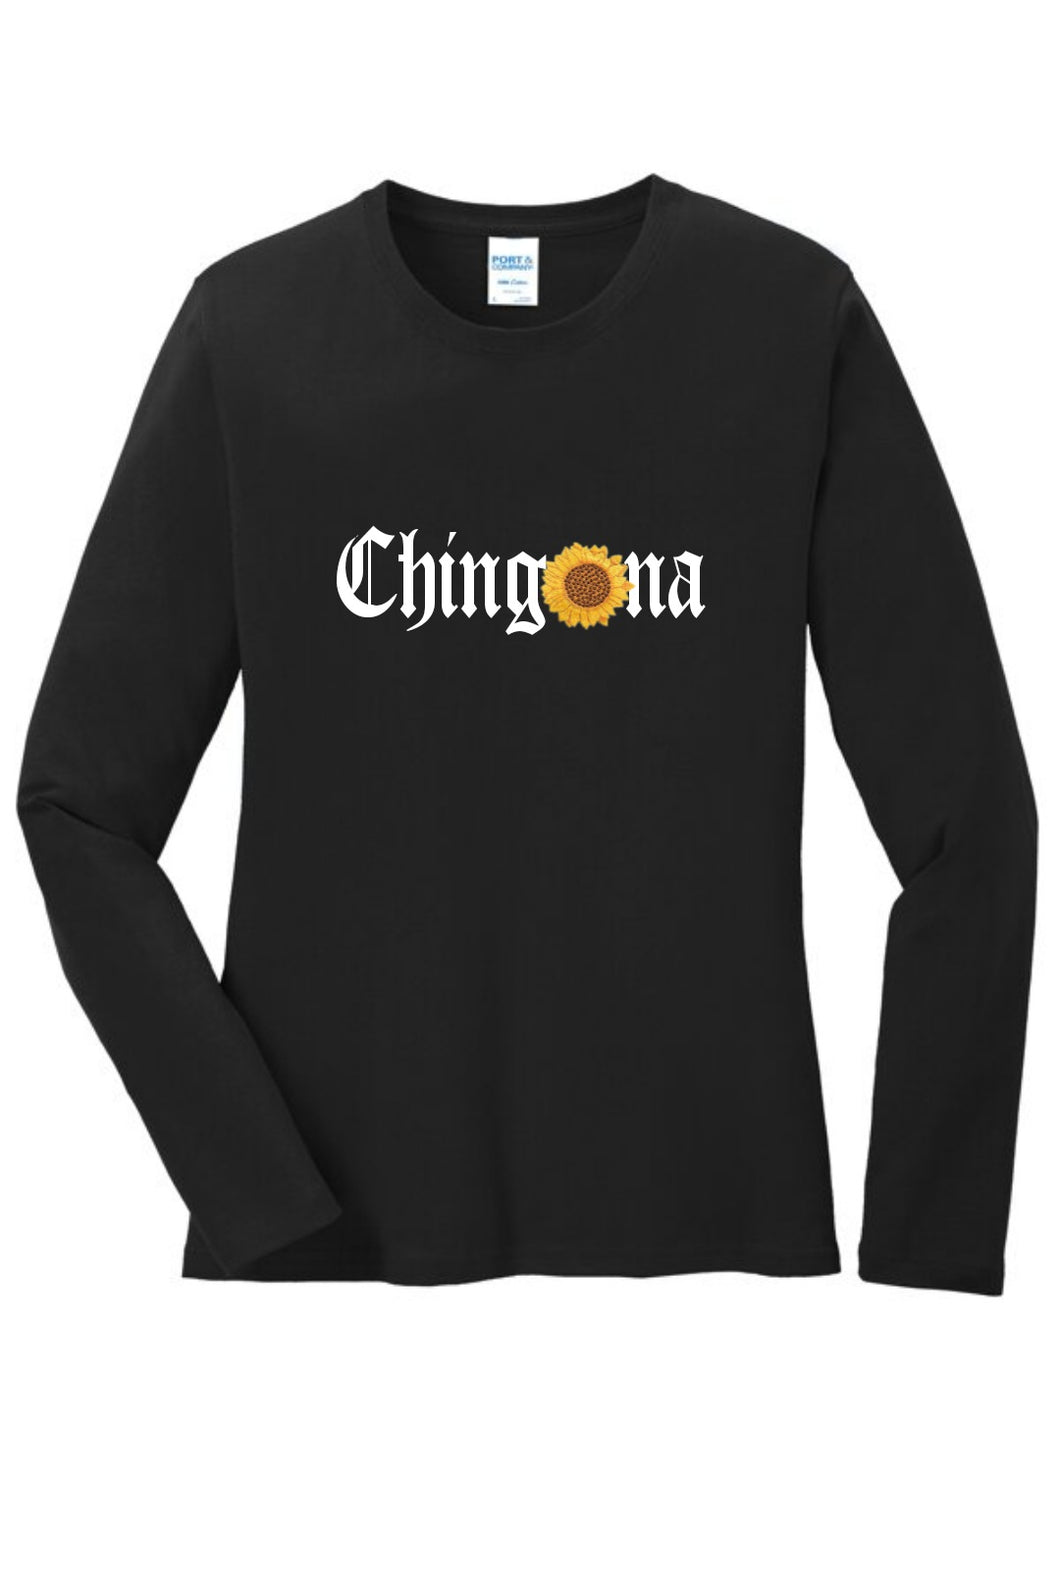 Chingona Sunflower Longsleeve Shirt